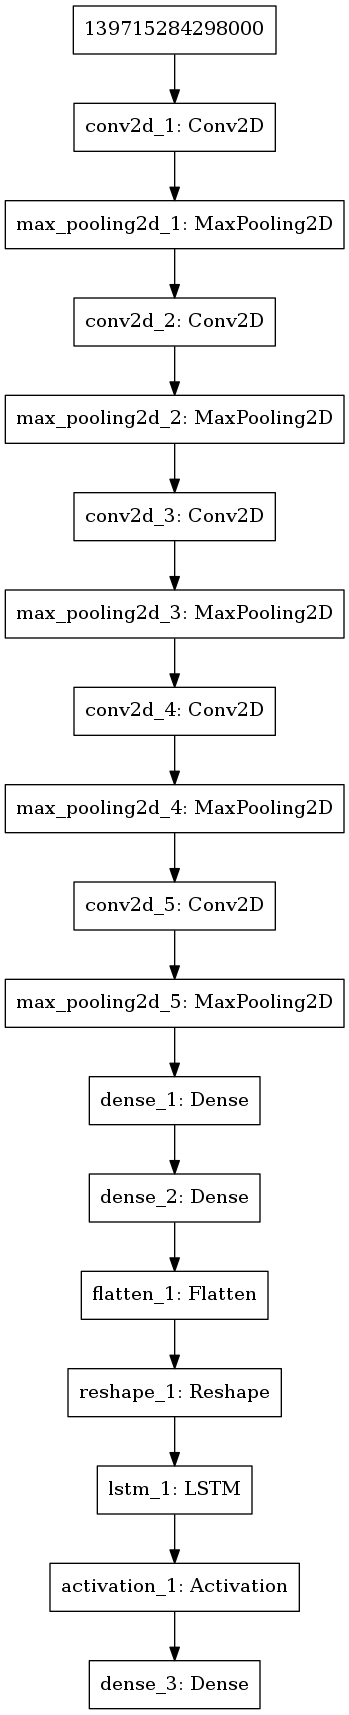 model_controlnet